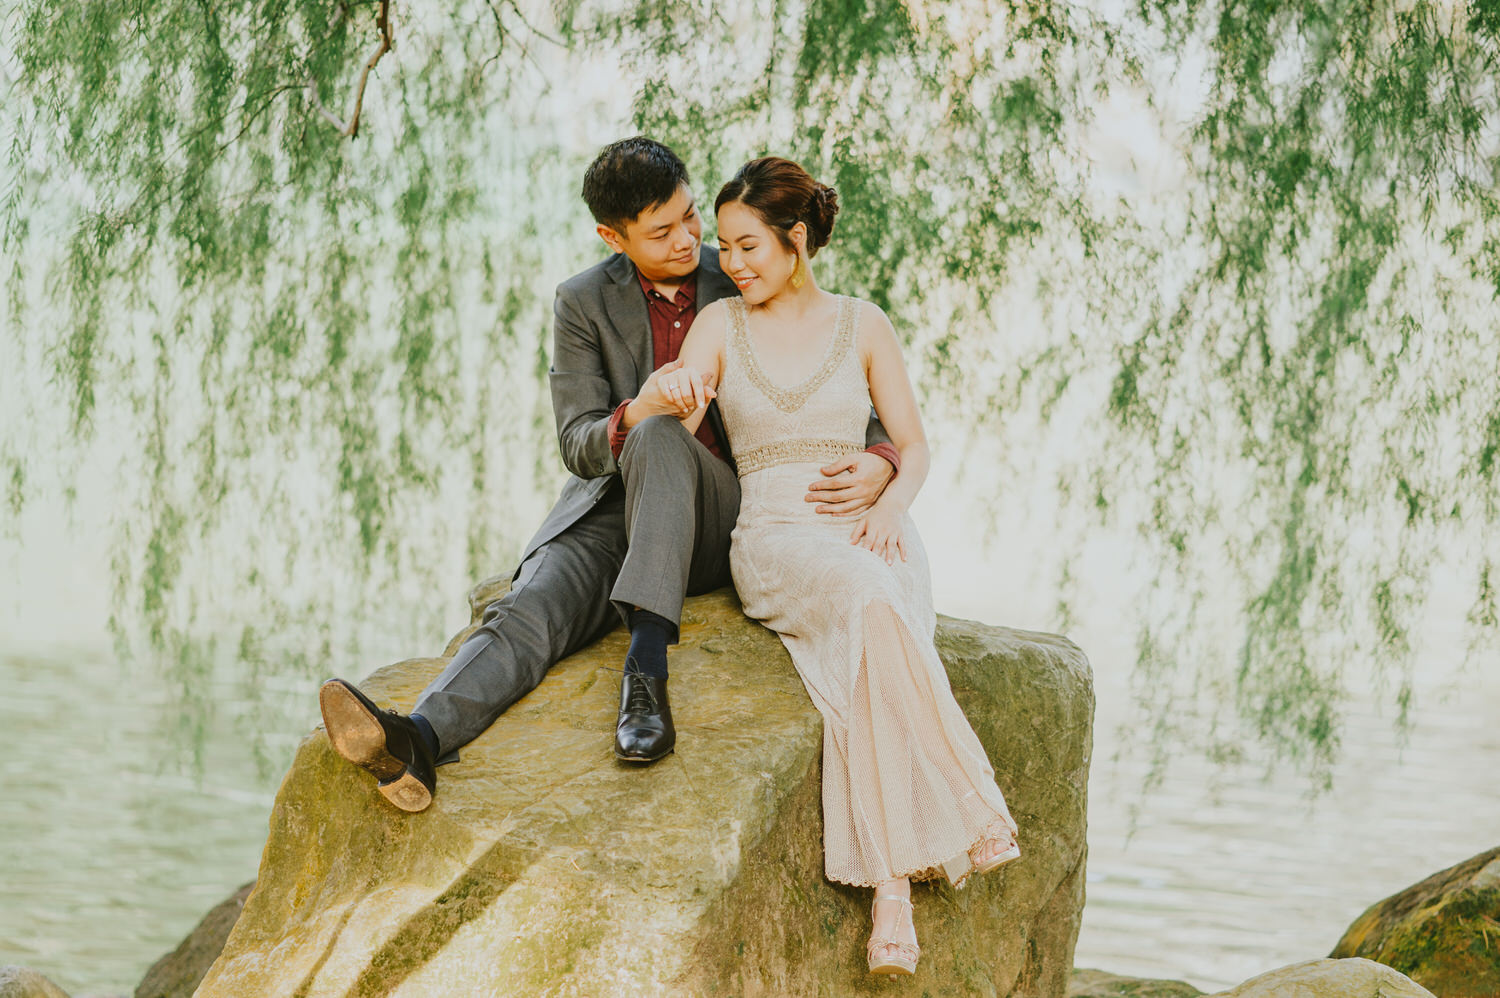 singapore prewedding destination - singapore wedding - diktatphotography - kadek artayasa - nikole + ardika - 10